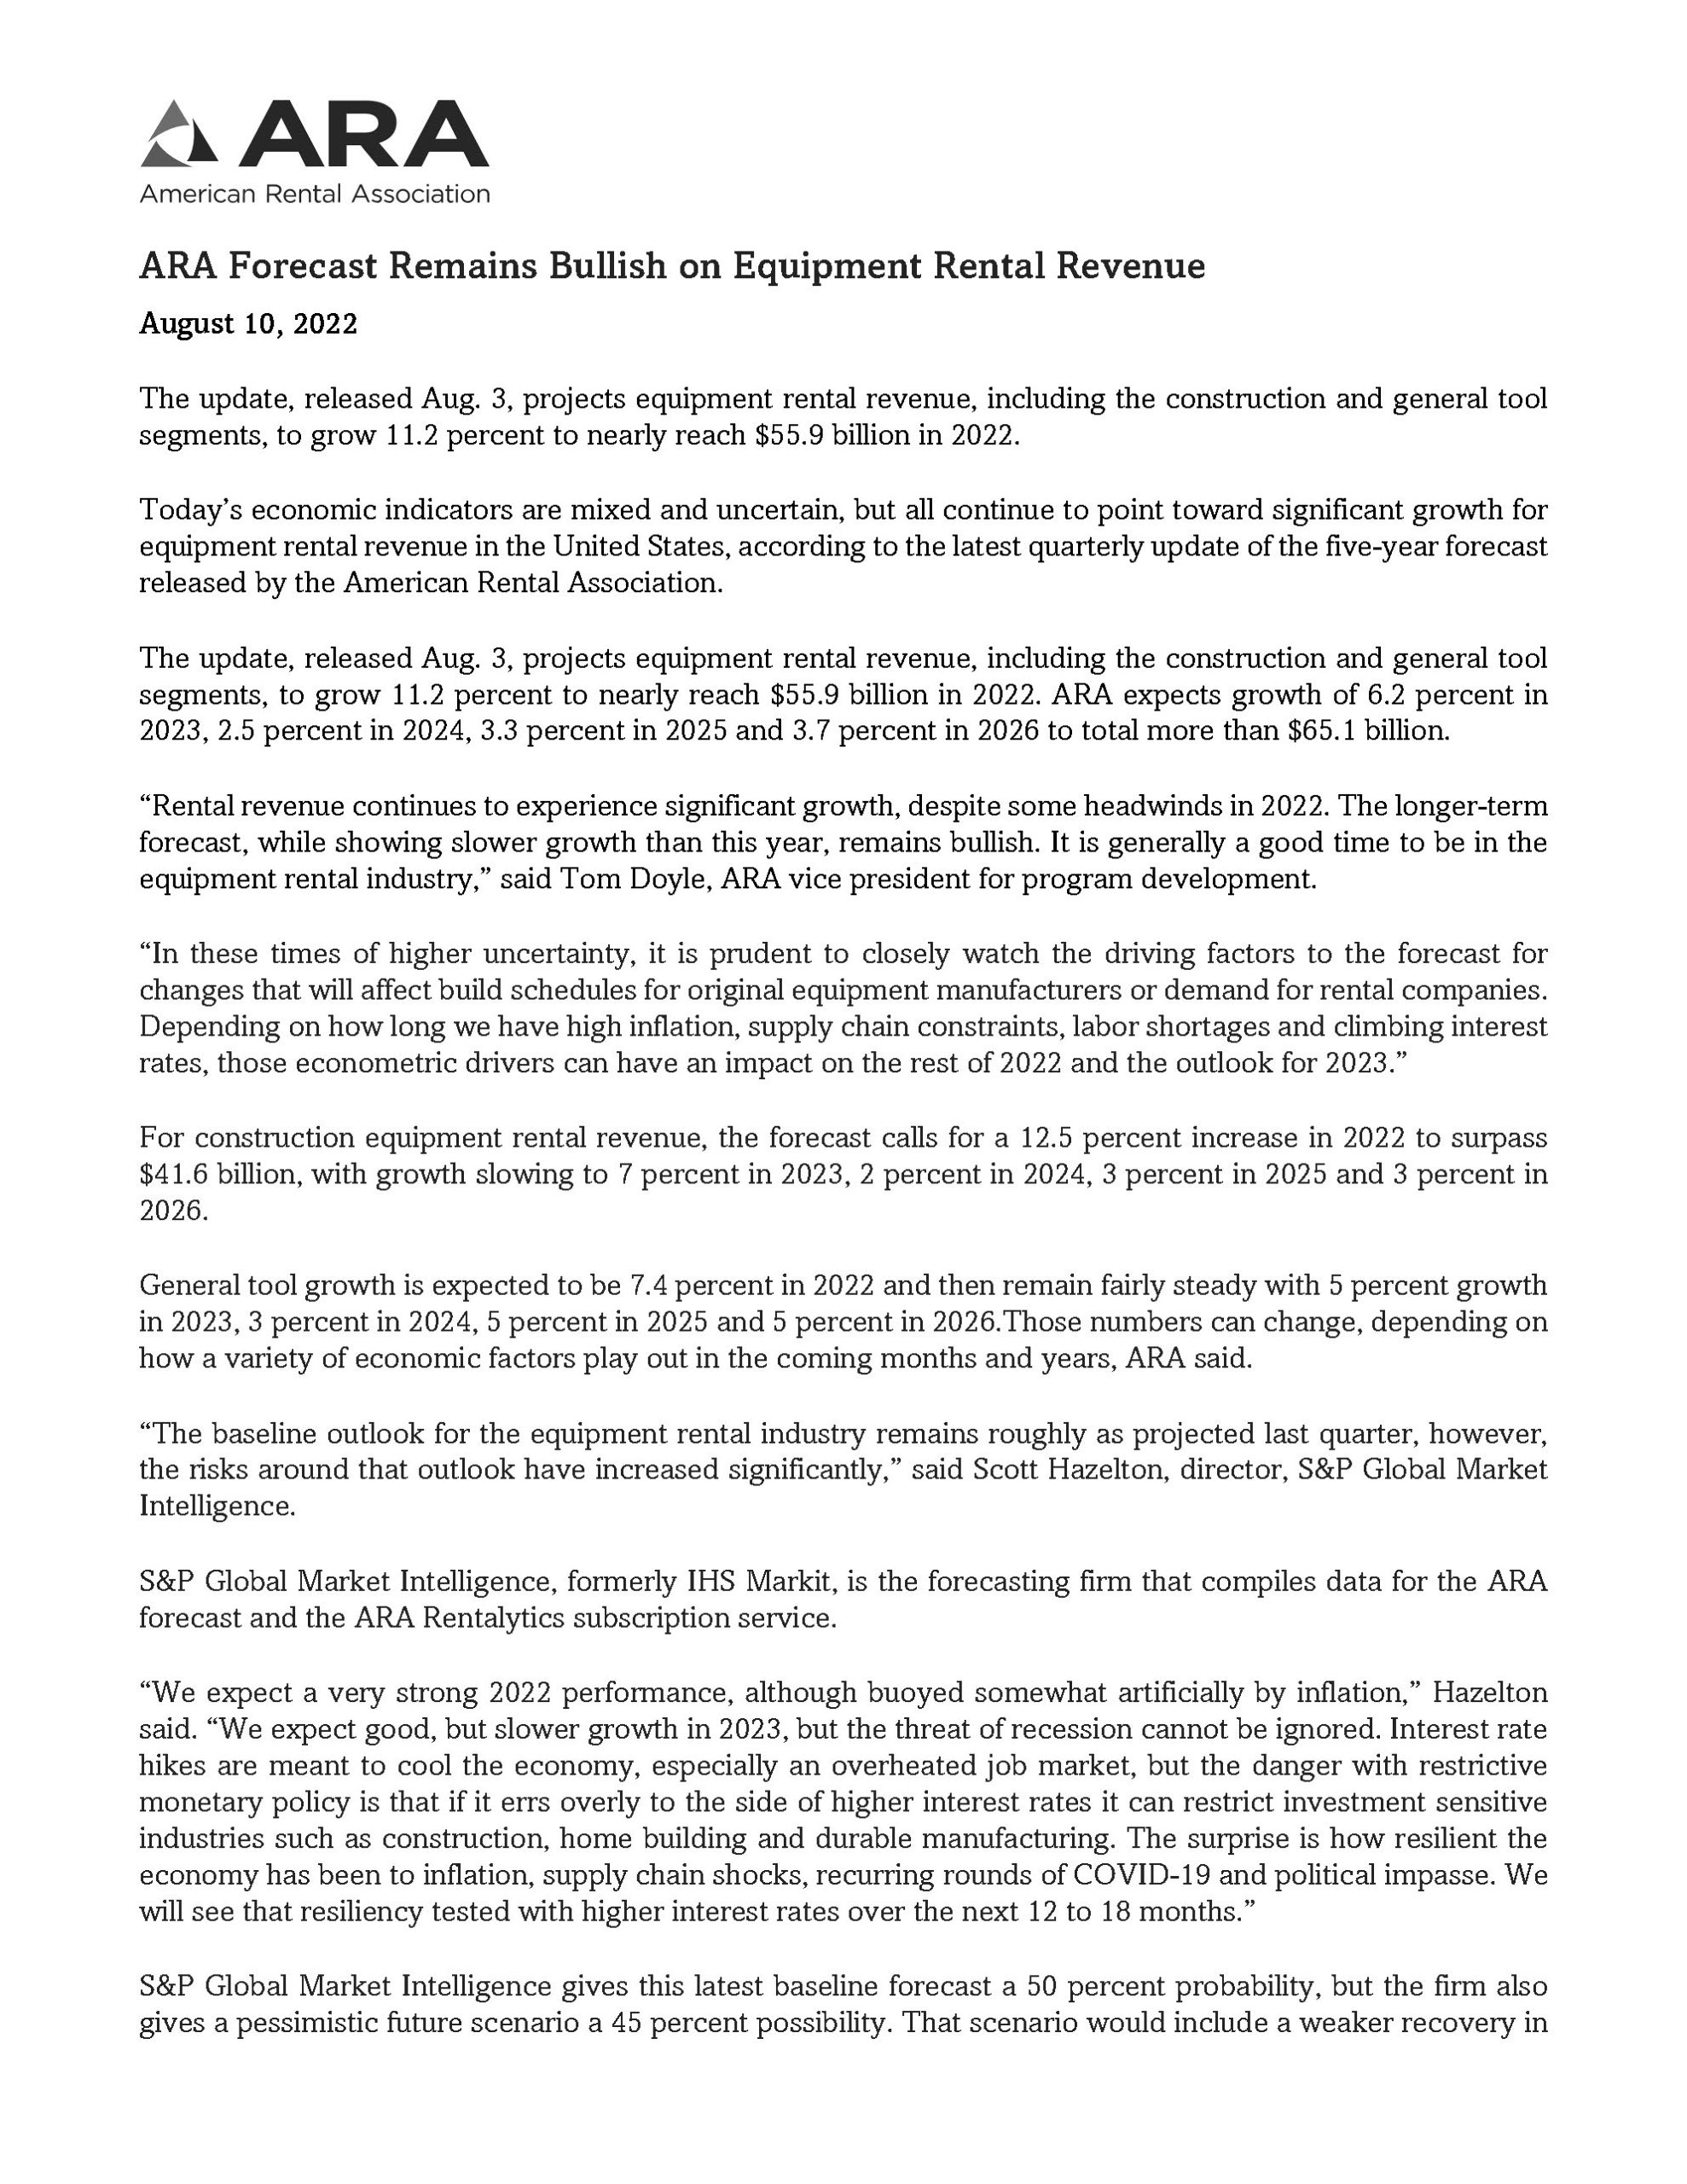 ARA Forecast Remains Bullish on Equipment Rental Revenue Growth 8.10.2022_Page_1